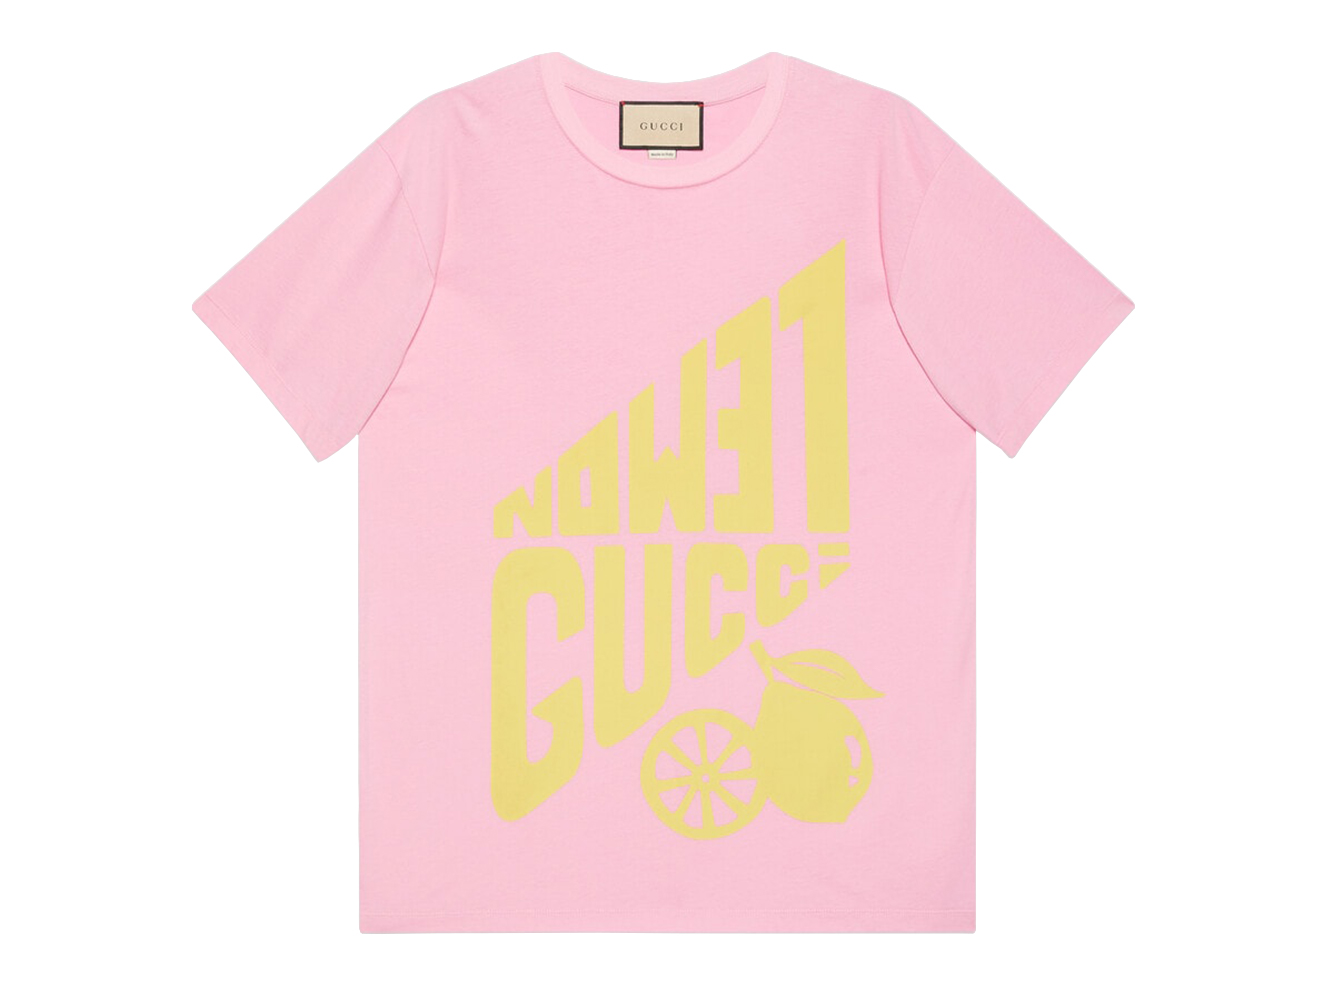 Gucci Women's Lemon Gucci Print T-Shirt Pink/Yellow